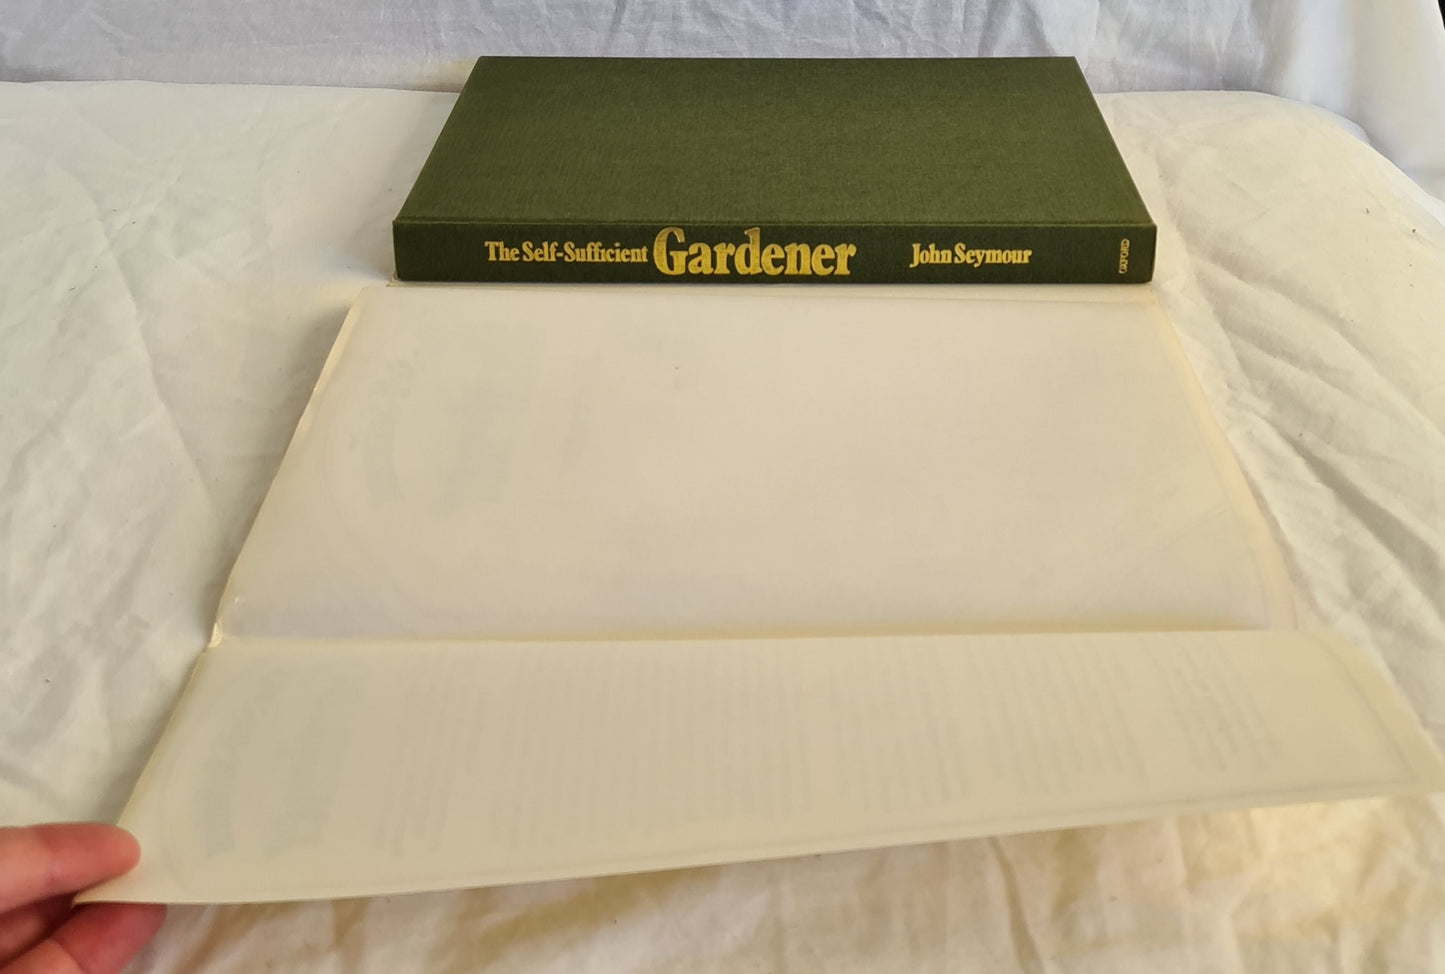 The Self-Sufficient Gardener by John Seymour